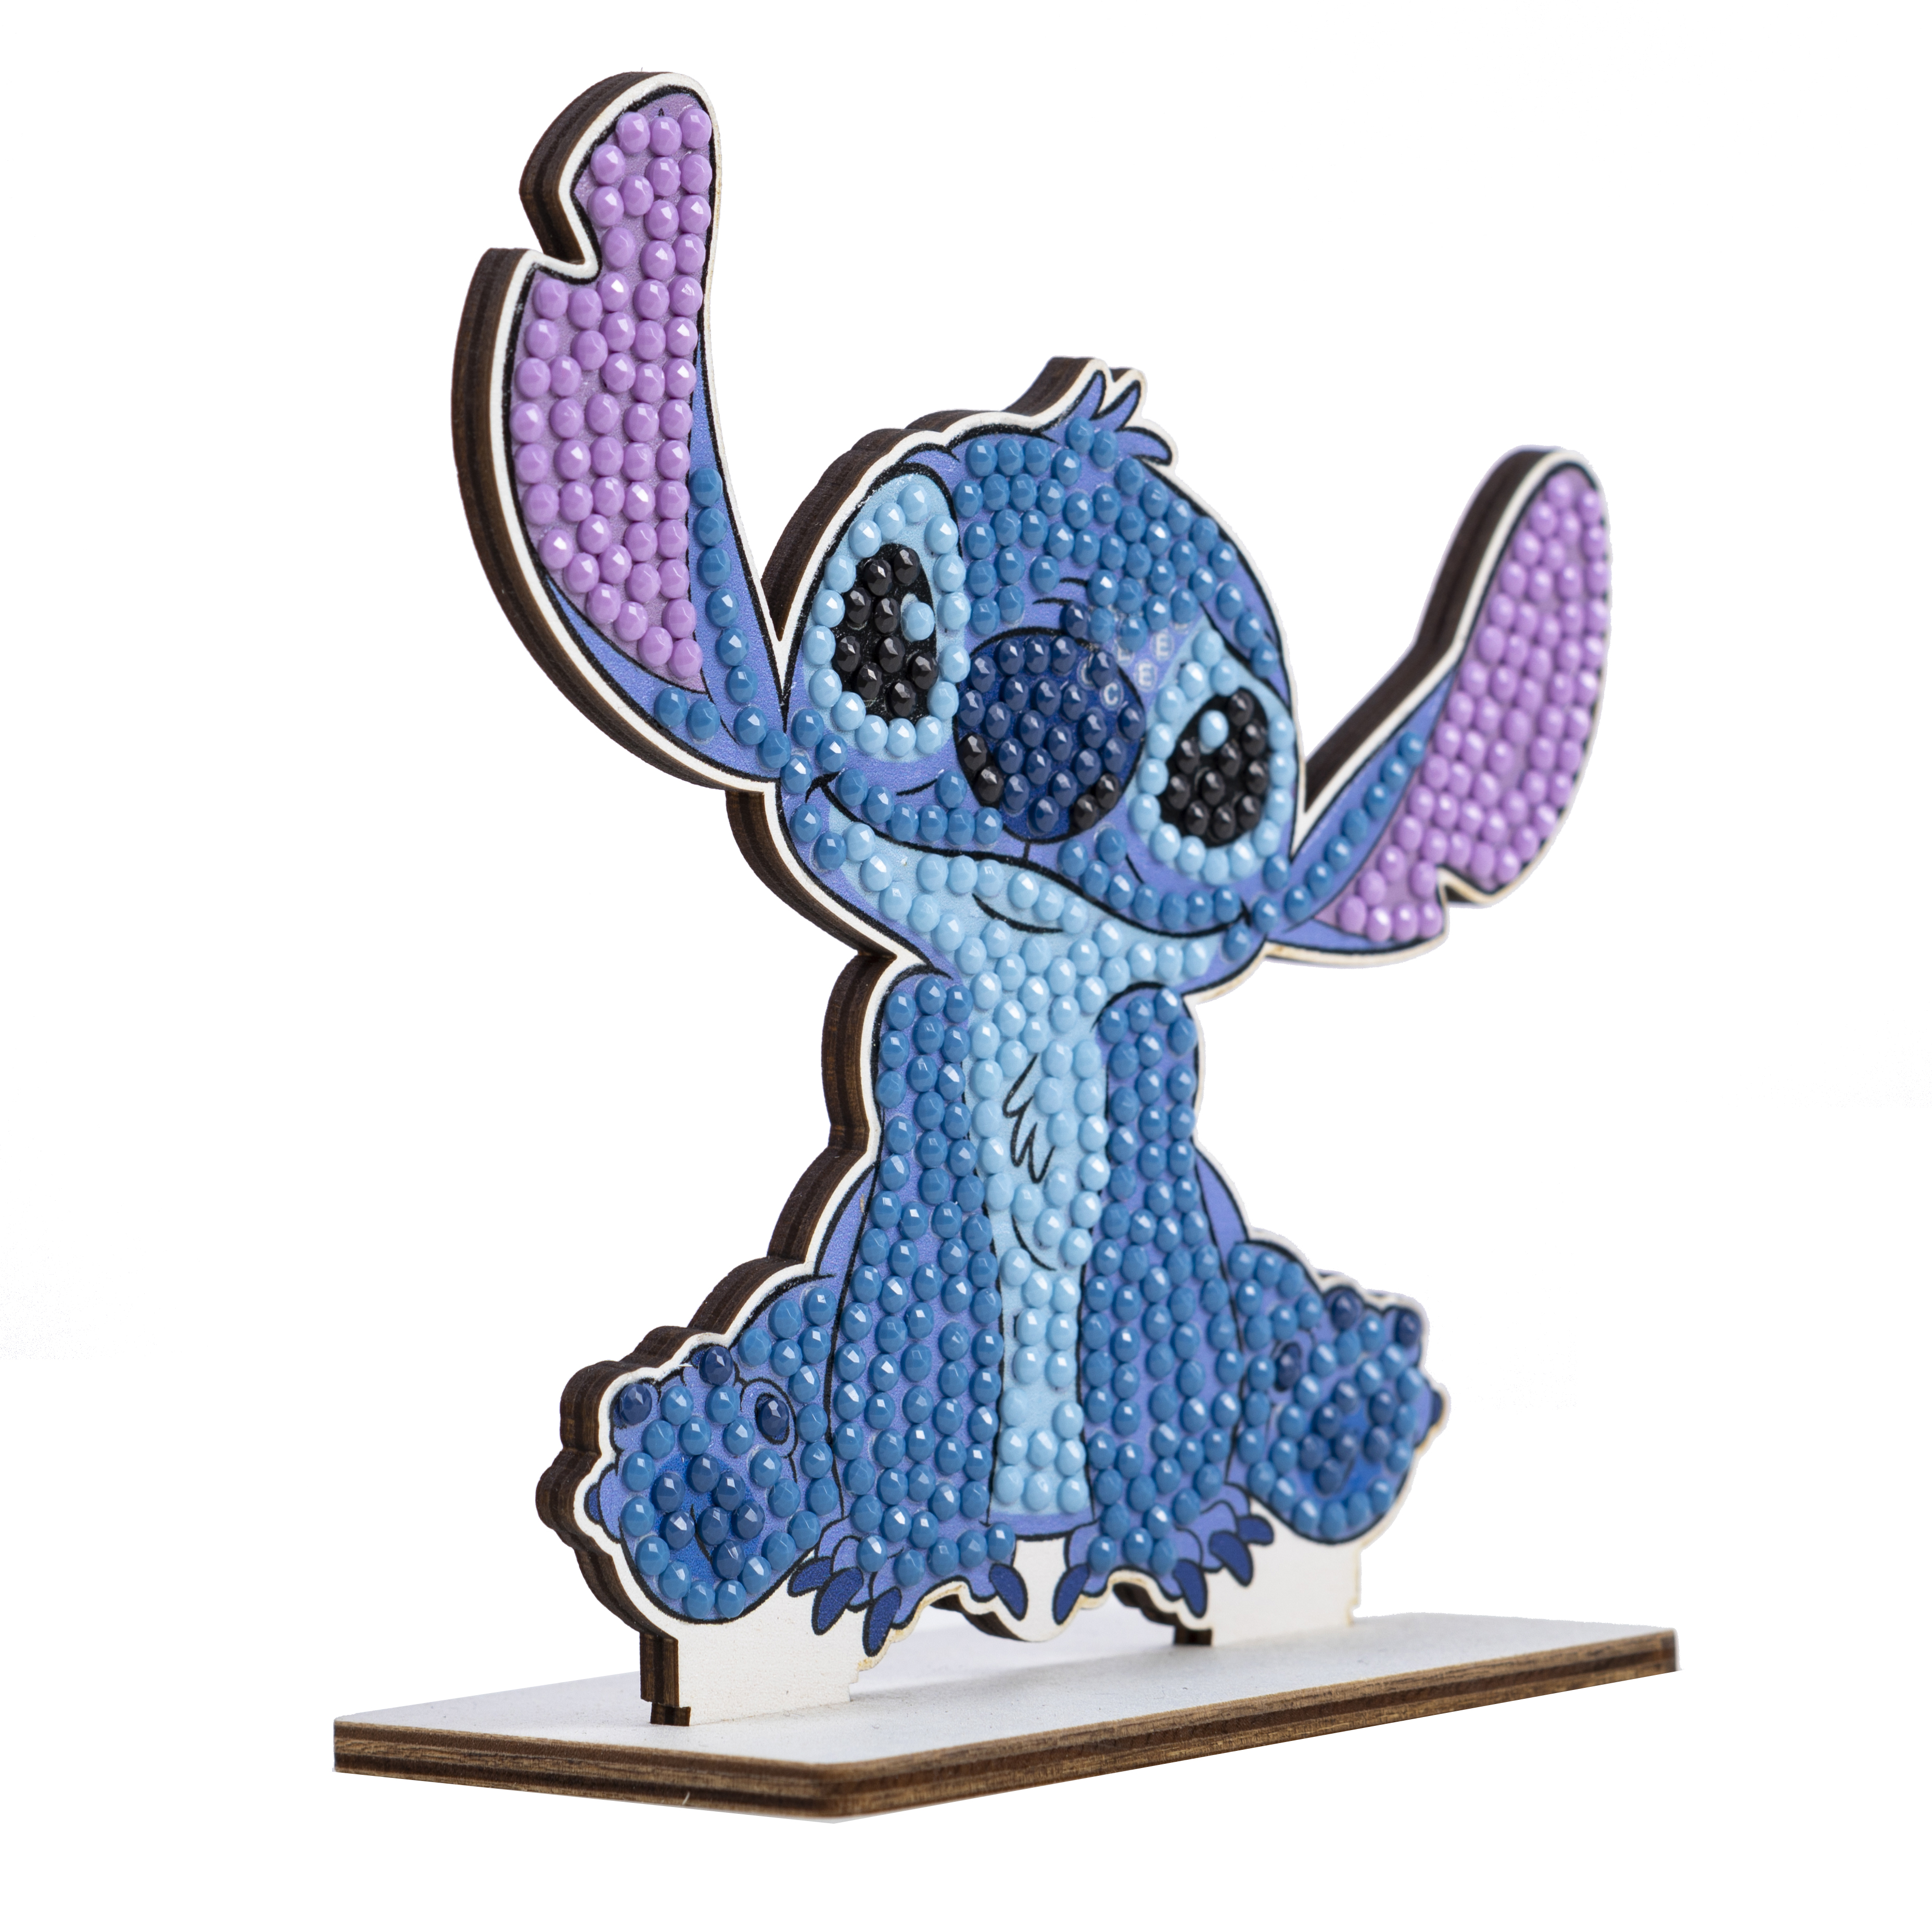 Figúrka Stitch Disney vykladanie z diamantov